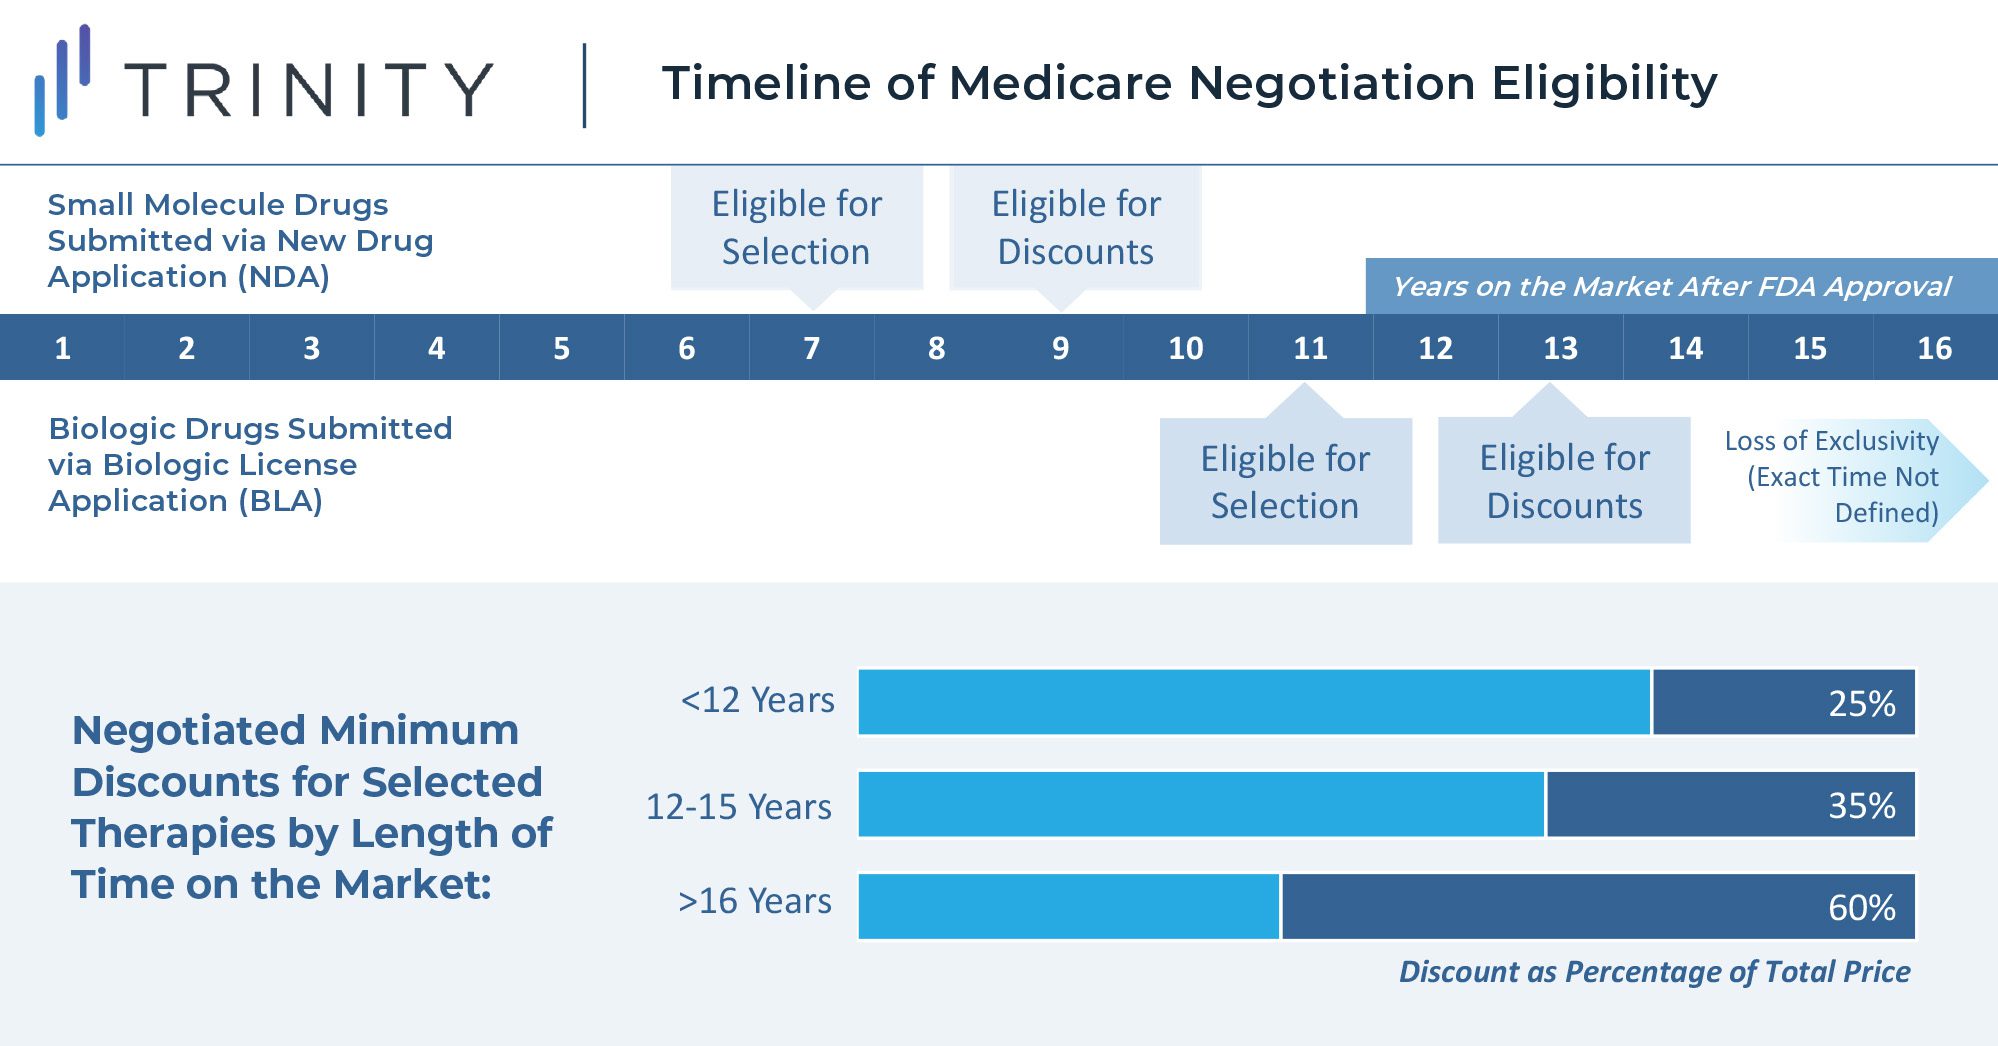 Timeline of Medicare Negotiation Eligibility